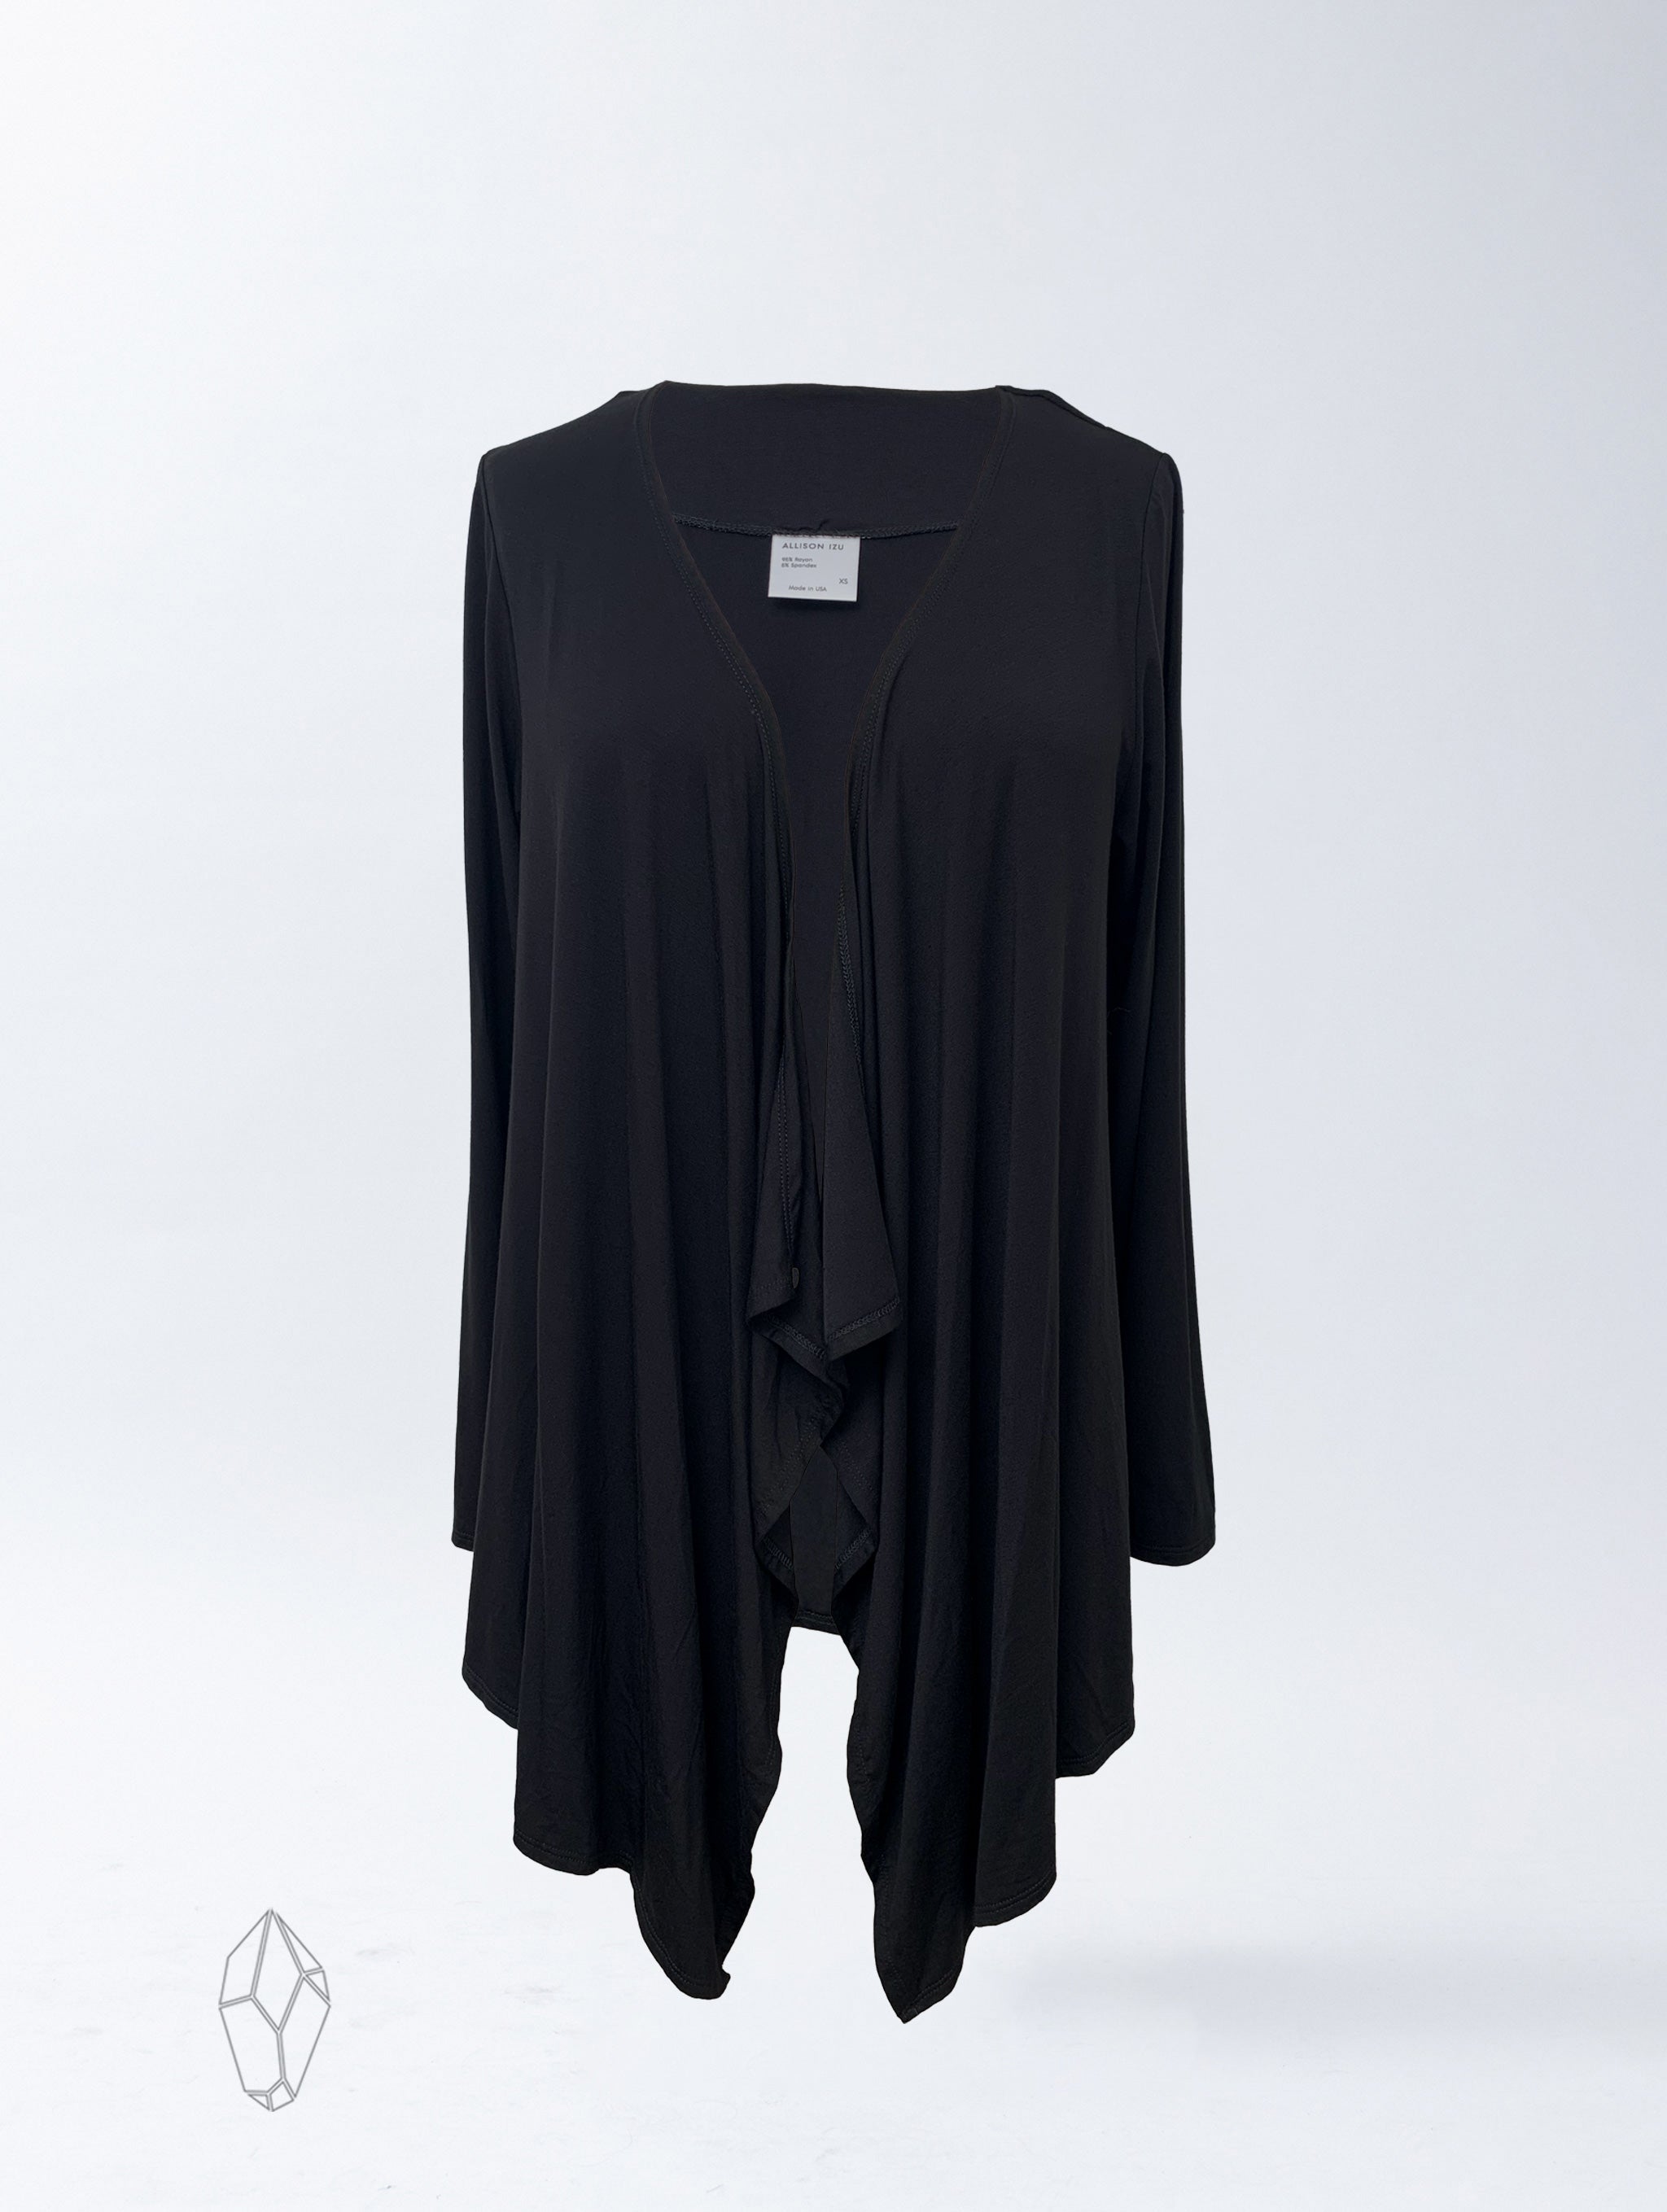 Amari Convertible Cover Up - Black Rayon Jersey